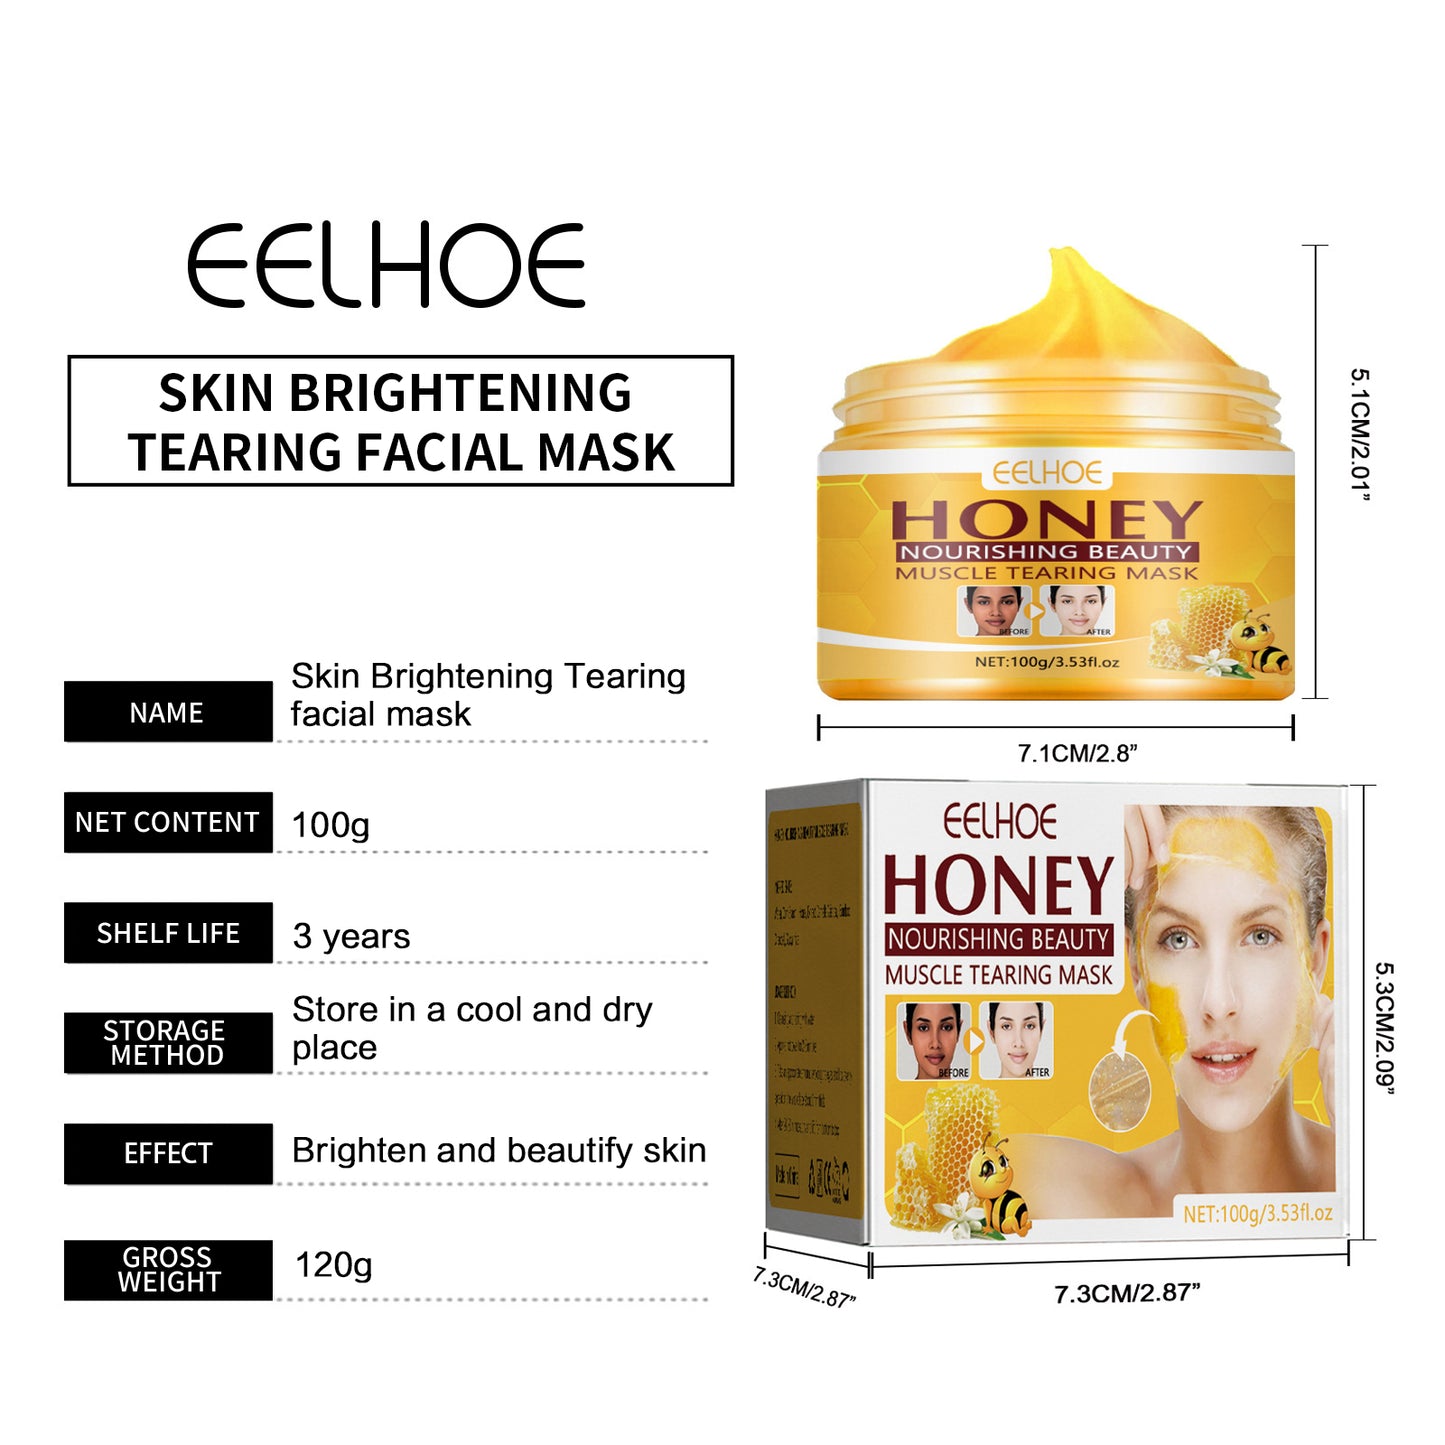 EELHOE Brightening Peel Off Mask Lighten Melanin Remove Blackhead Anti-Wrinkle Lifting Firming Whitening Freckle Face Tear Mask(100g)